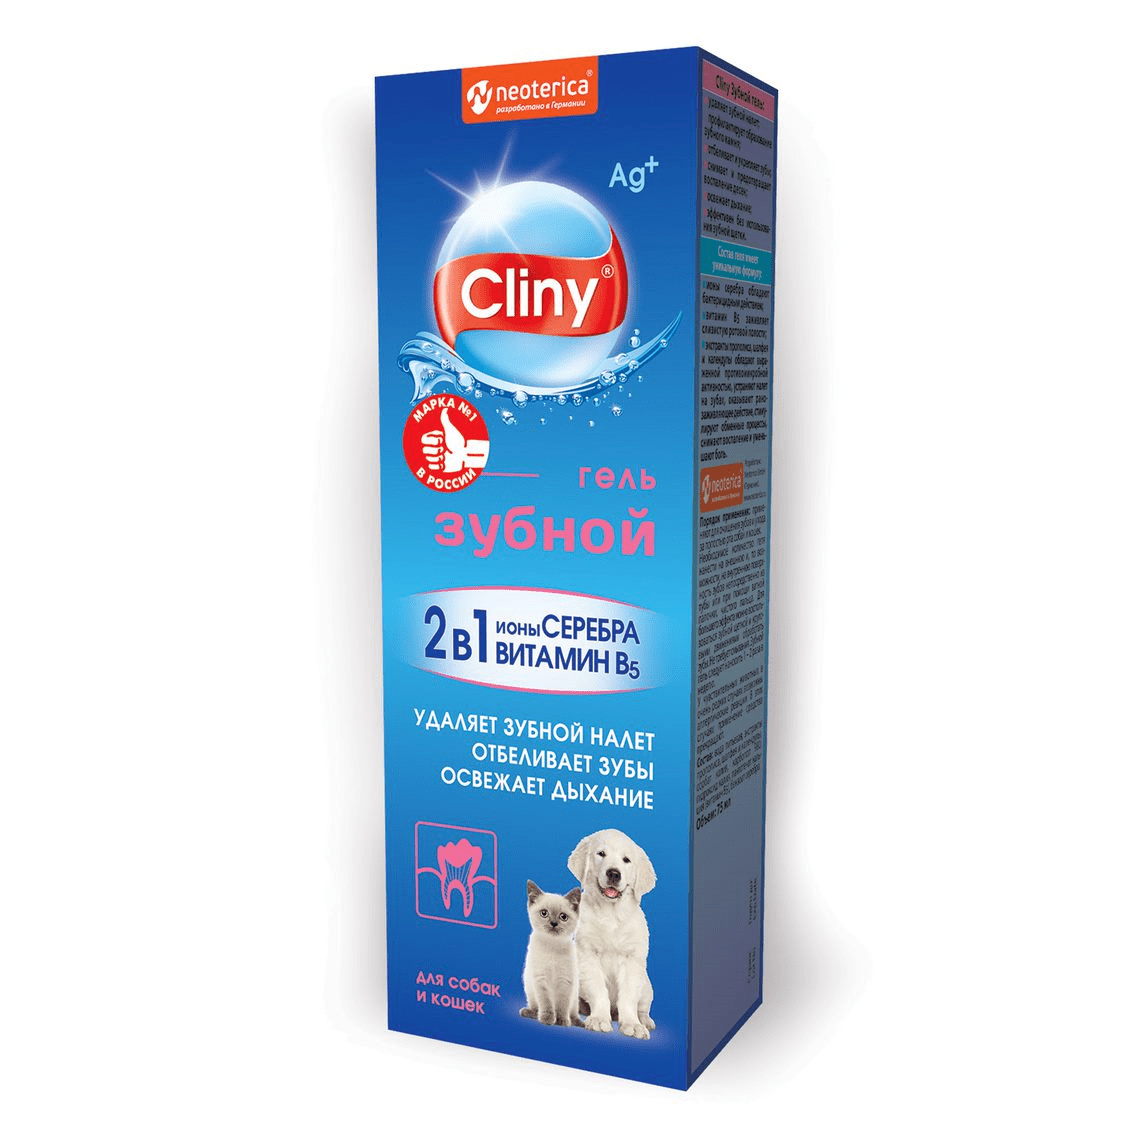 Cliny зубной гель Cliny, 75 мл (90 г) Cliny зубной гель Cliny, 75 мл (90 г) - фото 1